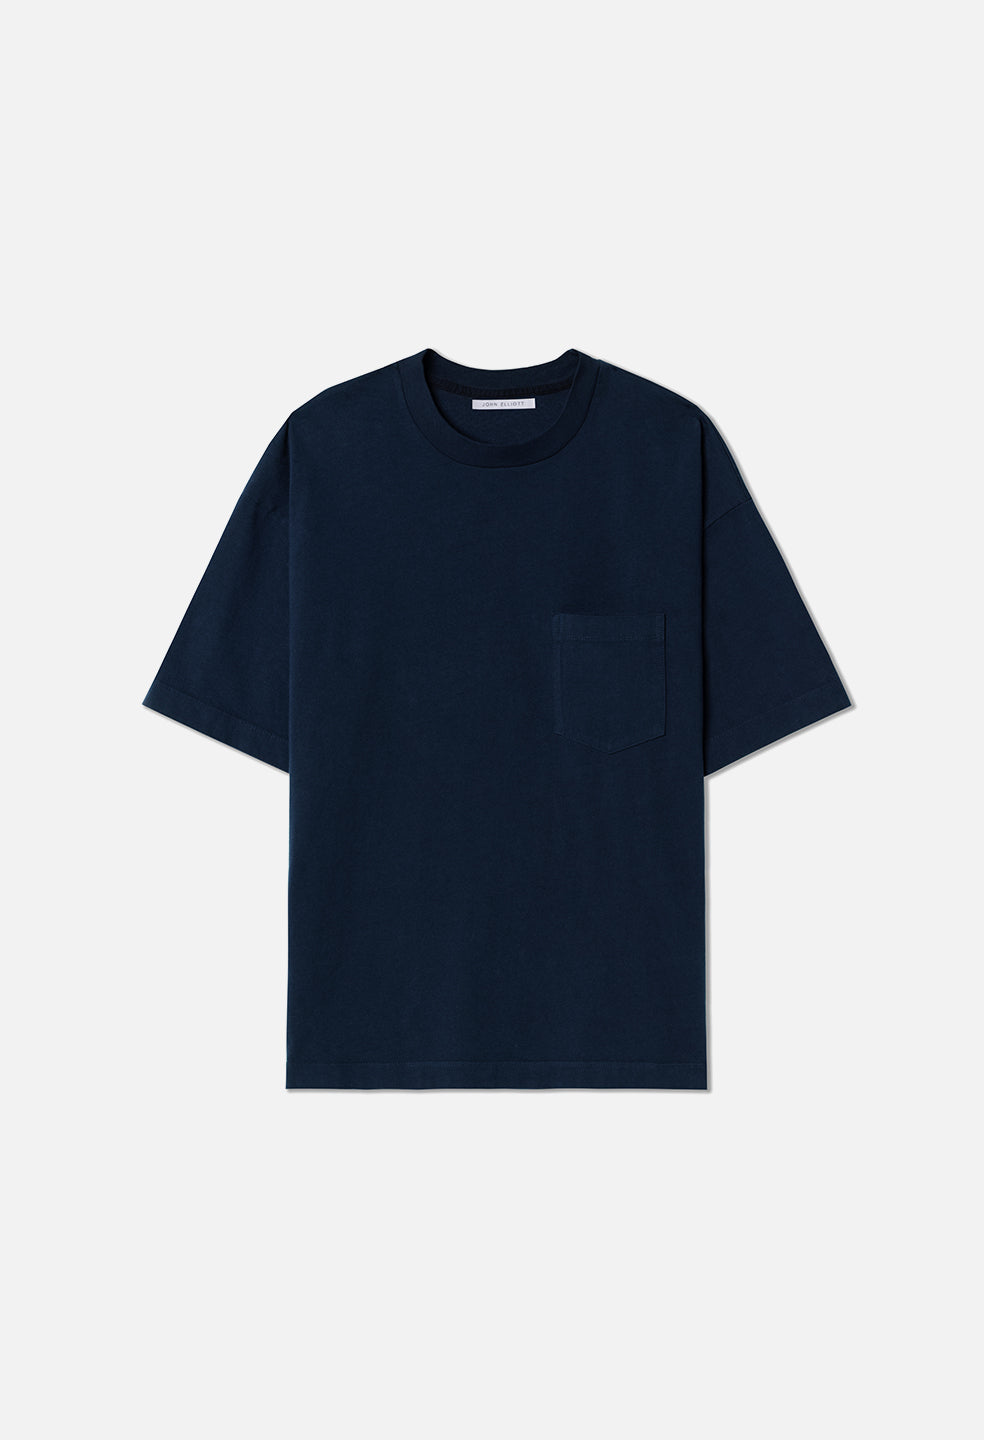 Louis Vuitton signature 3d pocket monogram t shirt for Sale in Miami